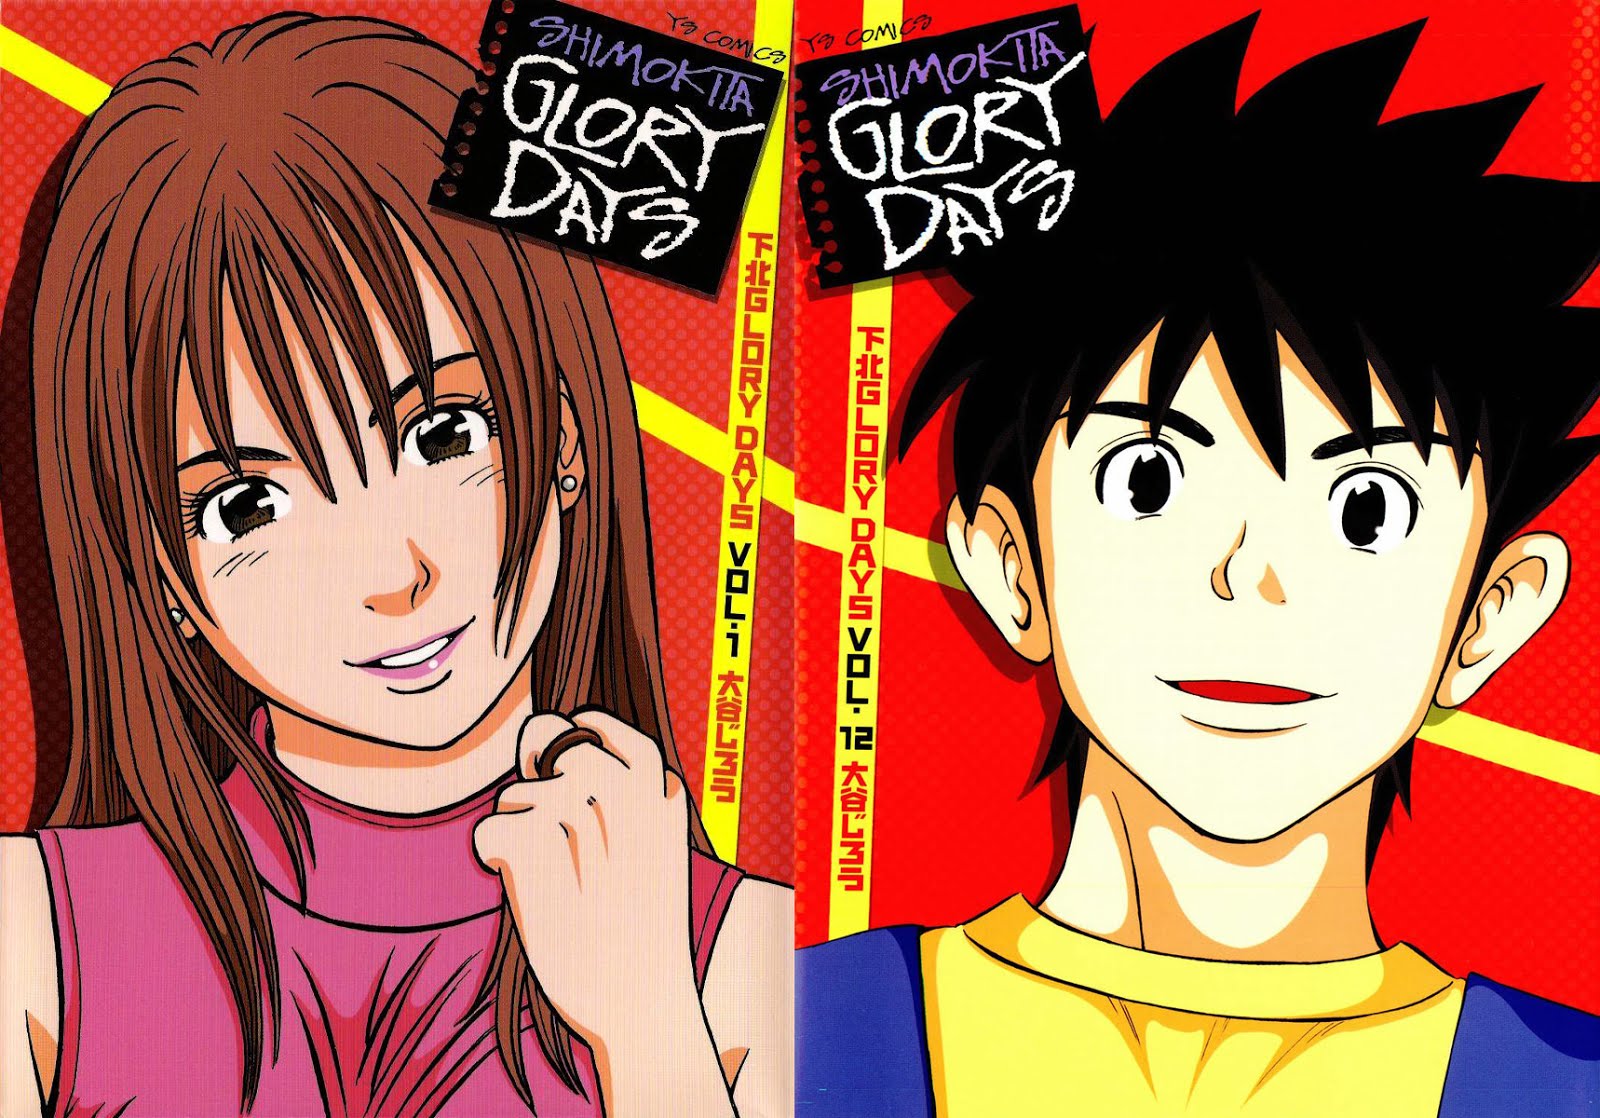 Shimokita Glory Days 下北ｇｌｏｒｙ ｄａｙｓ 12 Volume Complete Raw Manga Land